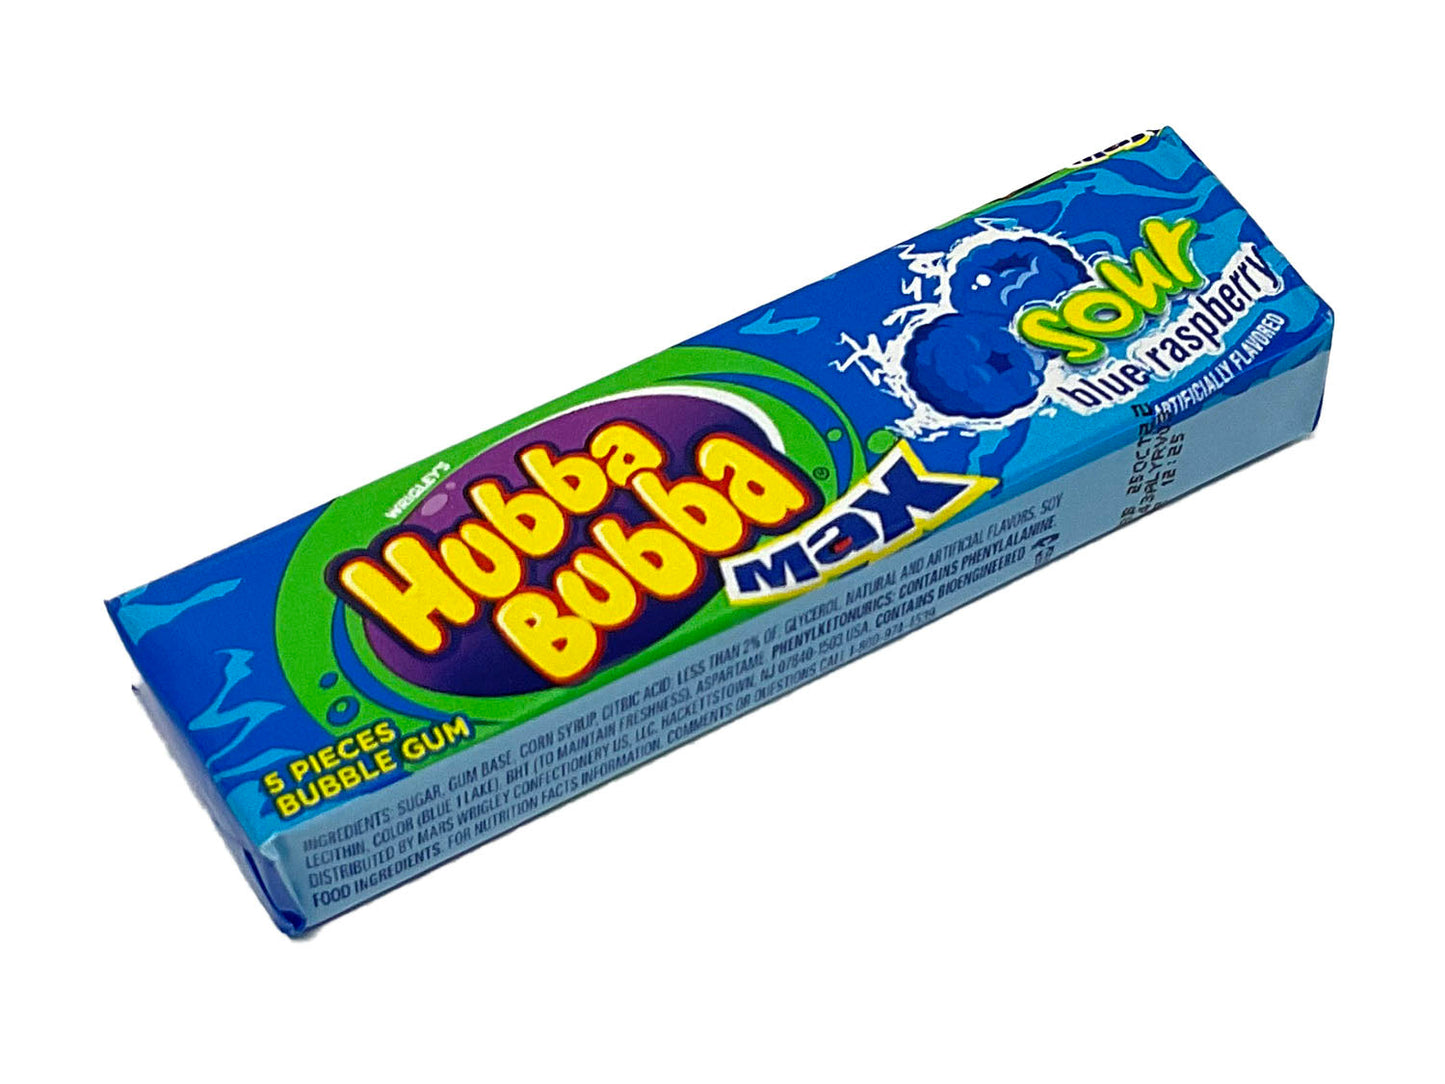 Hubba Bubba Sour Blue Raspberry Tape, Gum